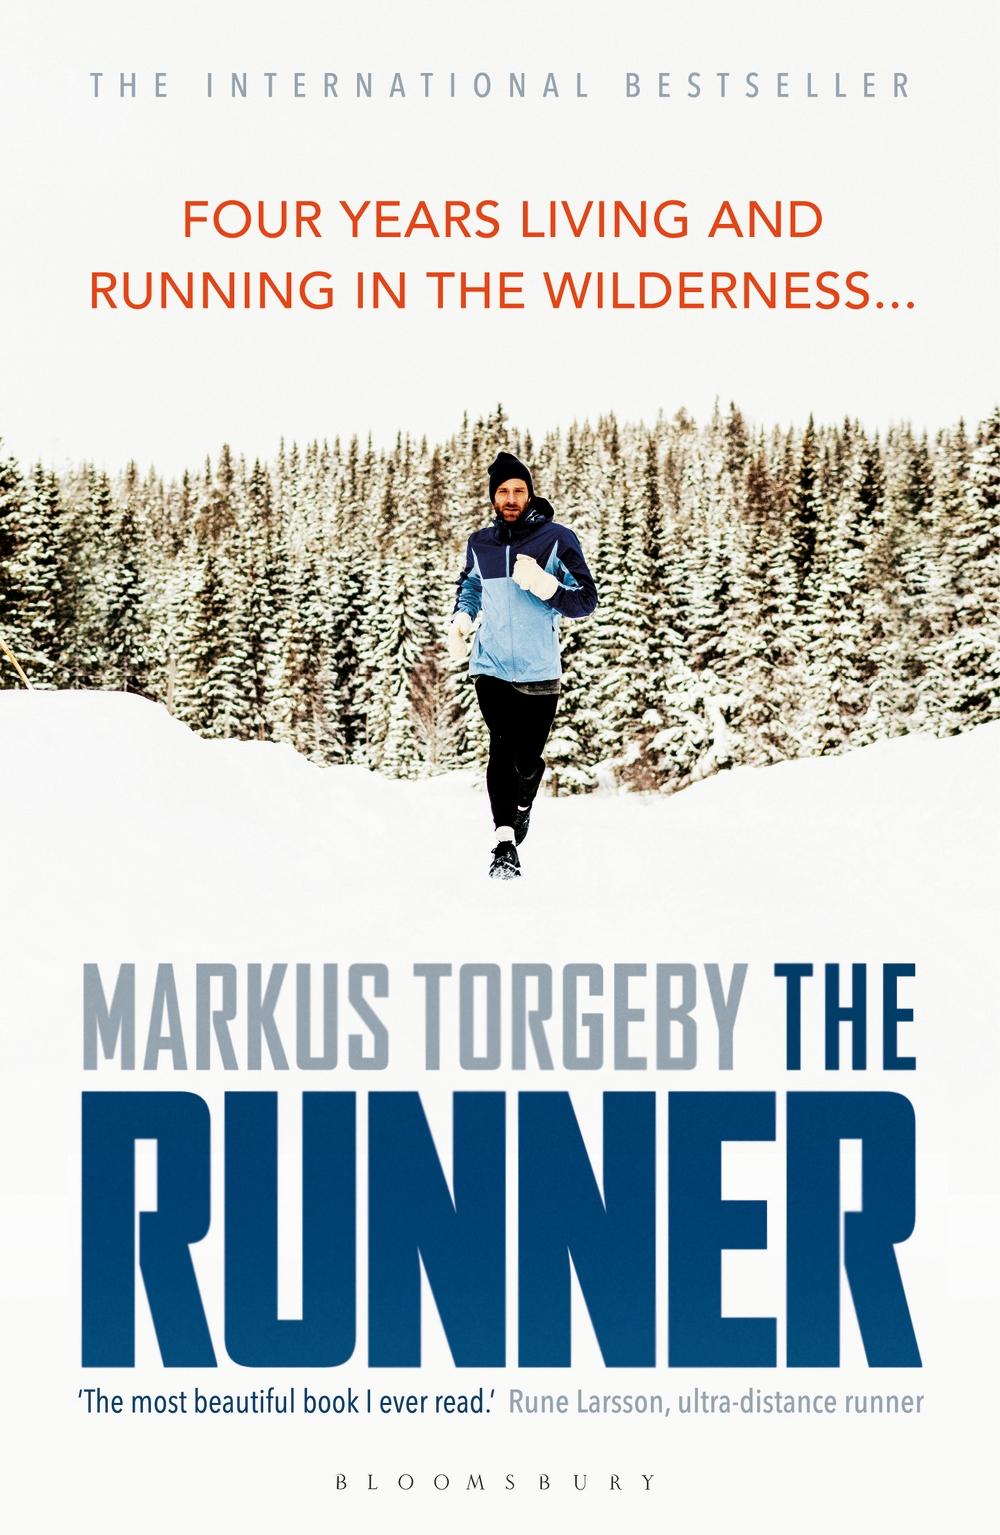 Runner - Markus Torgeby